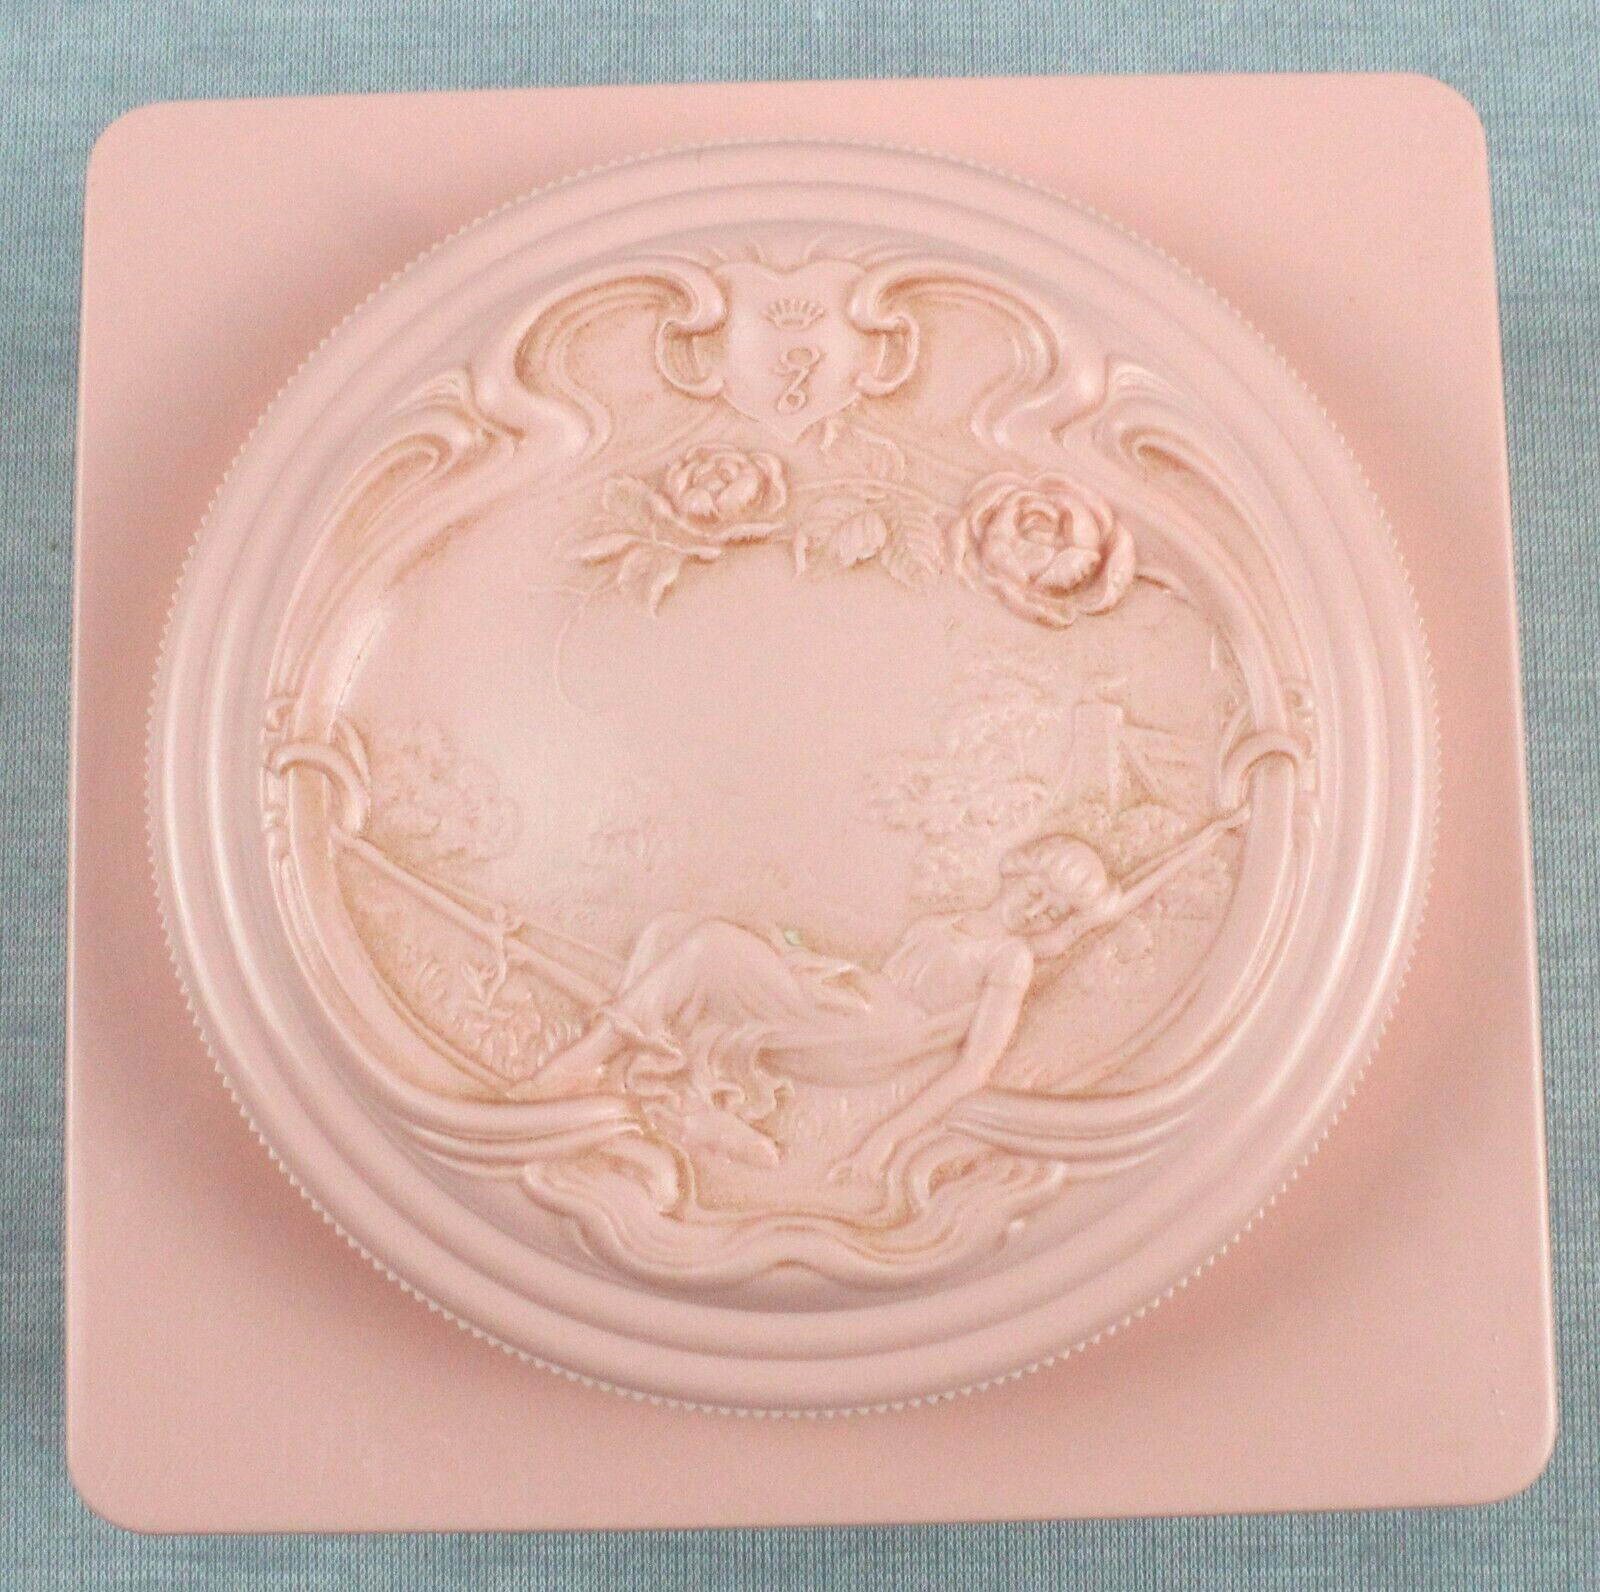 Evyan White Shoulders Bath Powder Vintage Dark Pink Sculpted Box Some powder 4x4